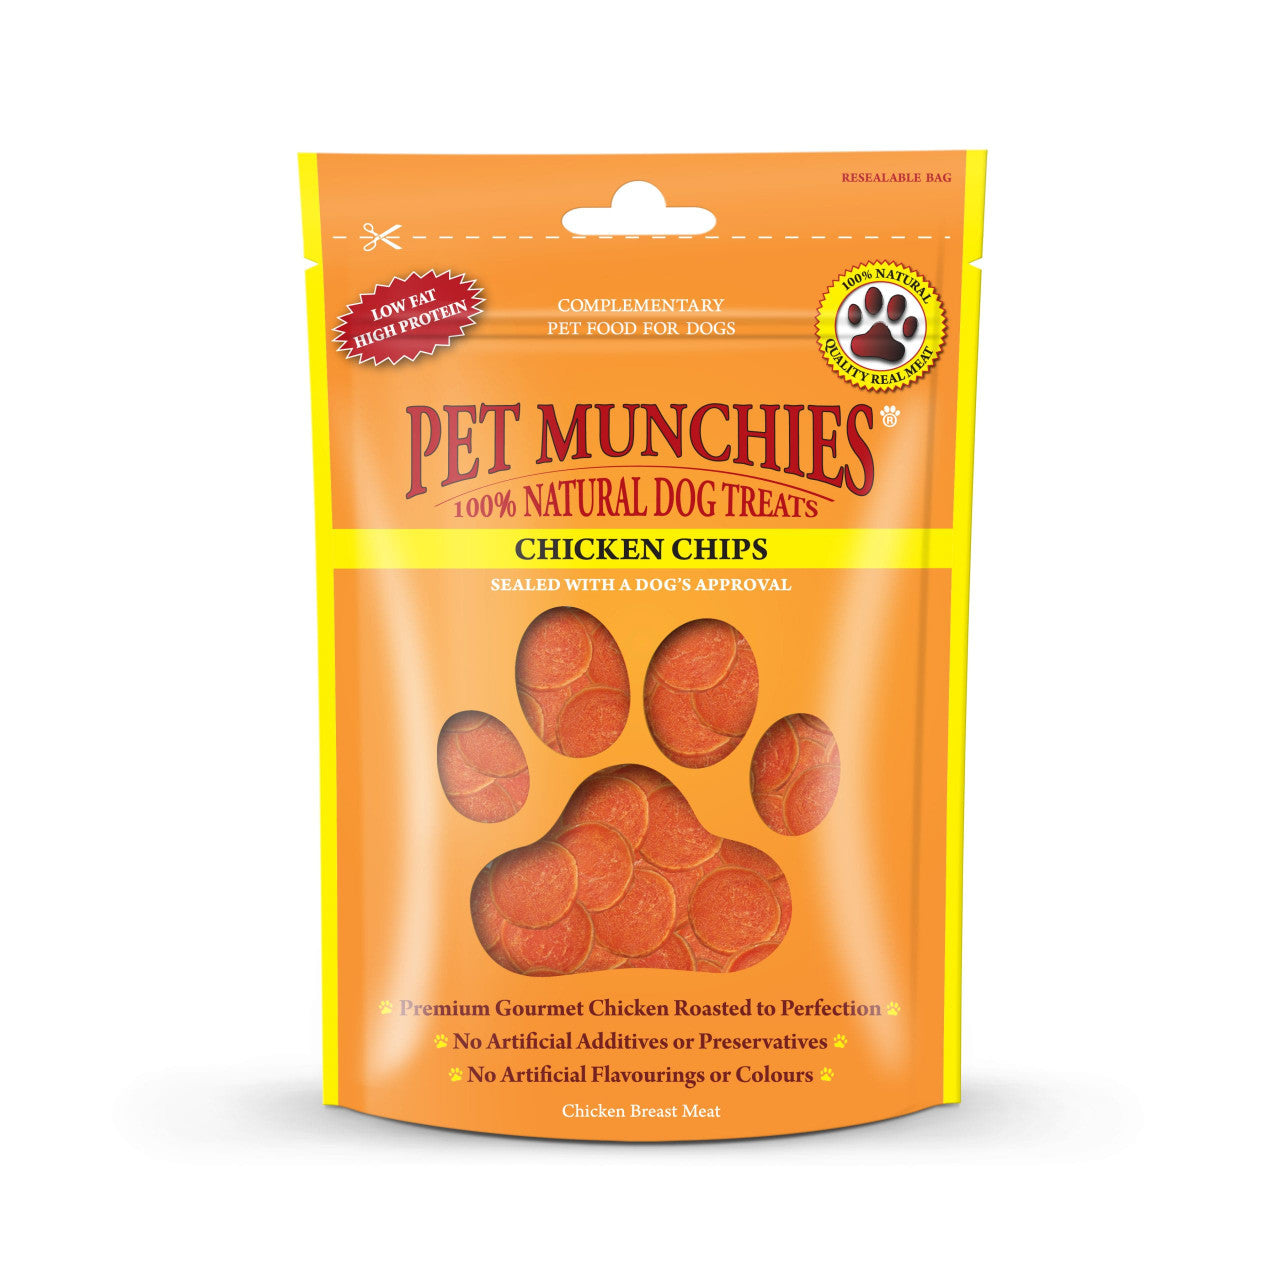 Pet Munchies 100g Chicken Chips - Dog Treats